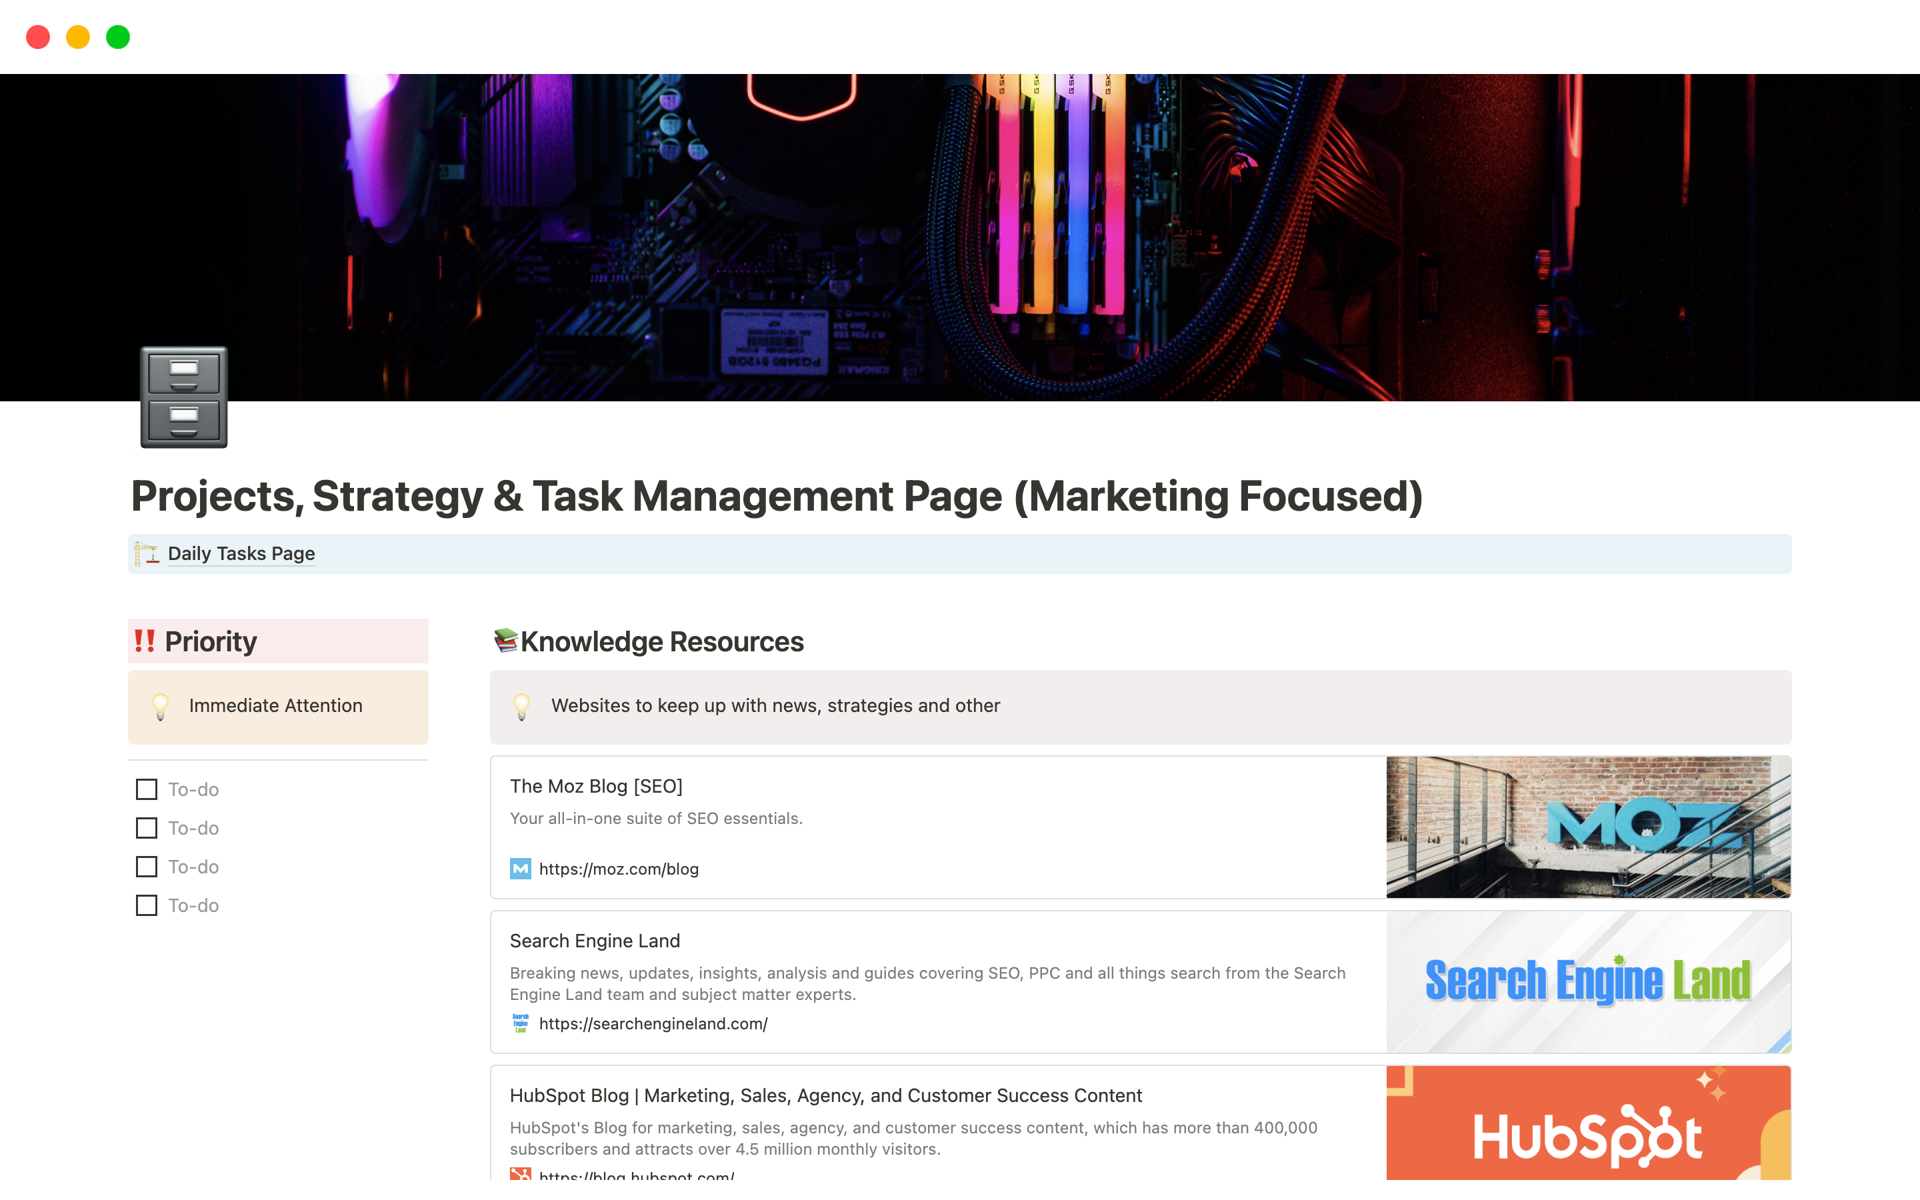 Vista previa de una plantilla para Projects, Strategy & Task Management Page